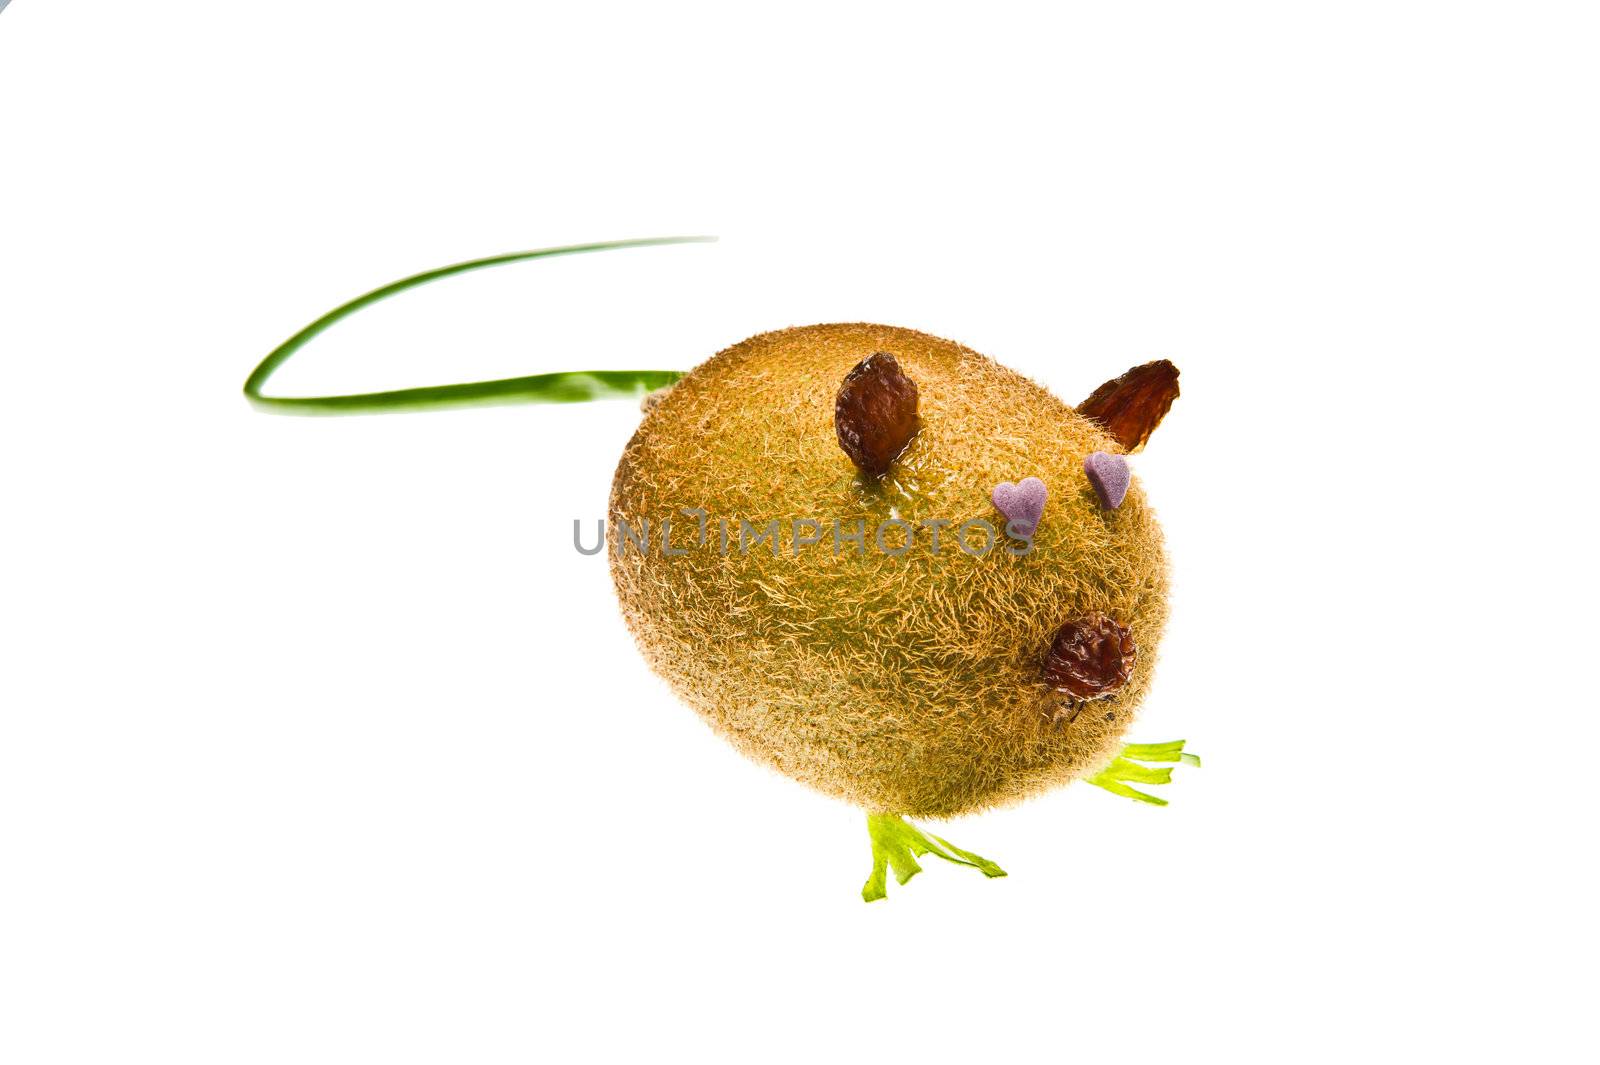 A nice little kiwi mouse.